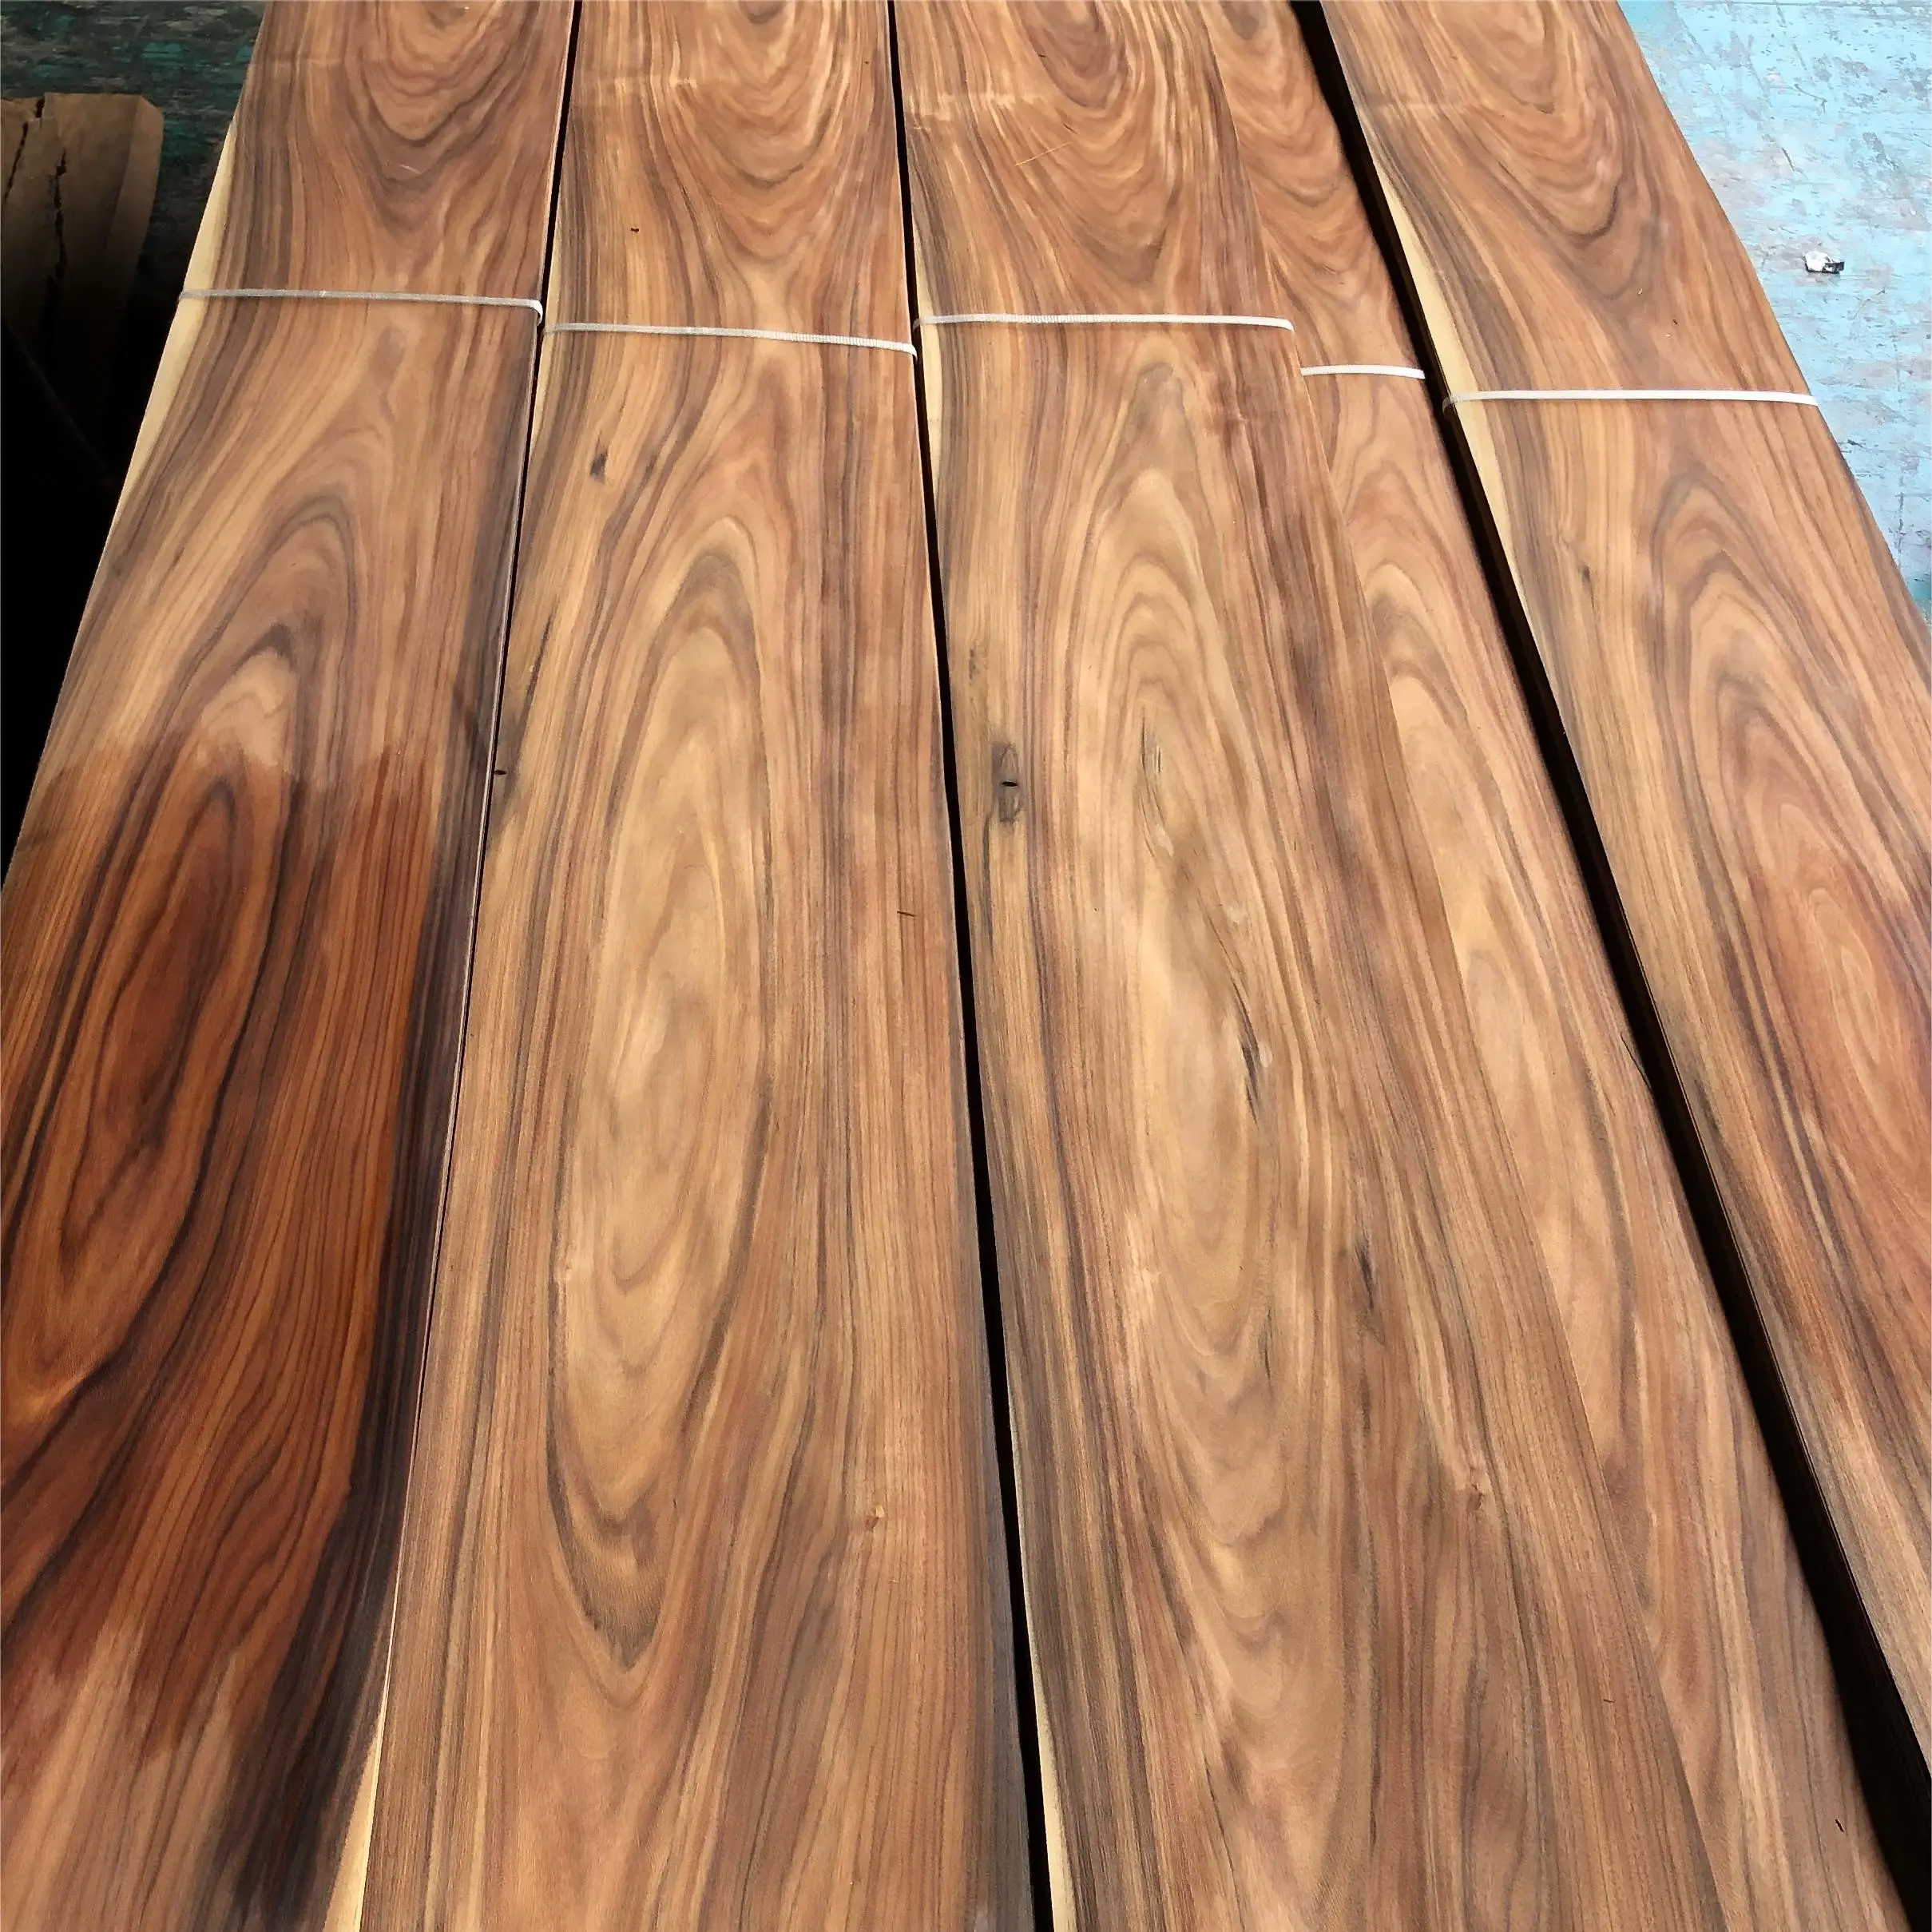 Bán buôn tự nhiên santos Rosewood Veneer tấm gỗ 0.5 mét hạt núi Brazil gỗ tự nhiên Veneer